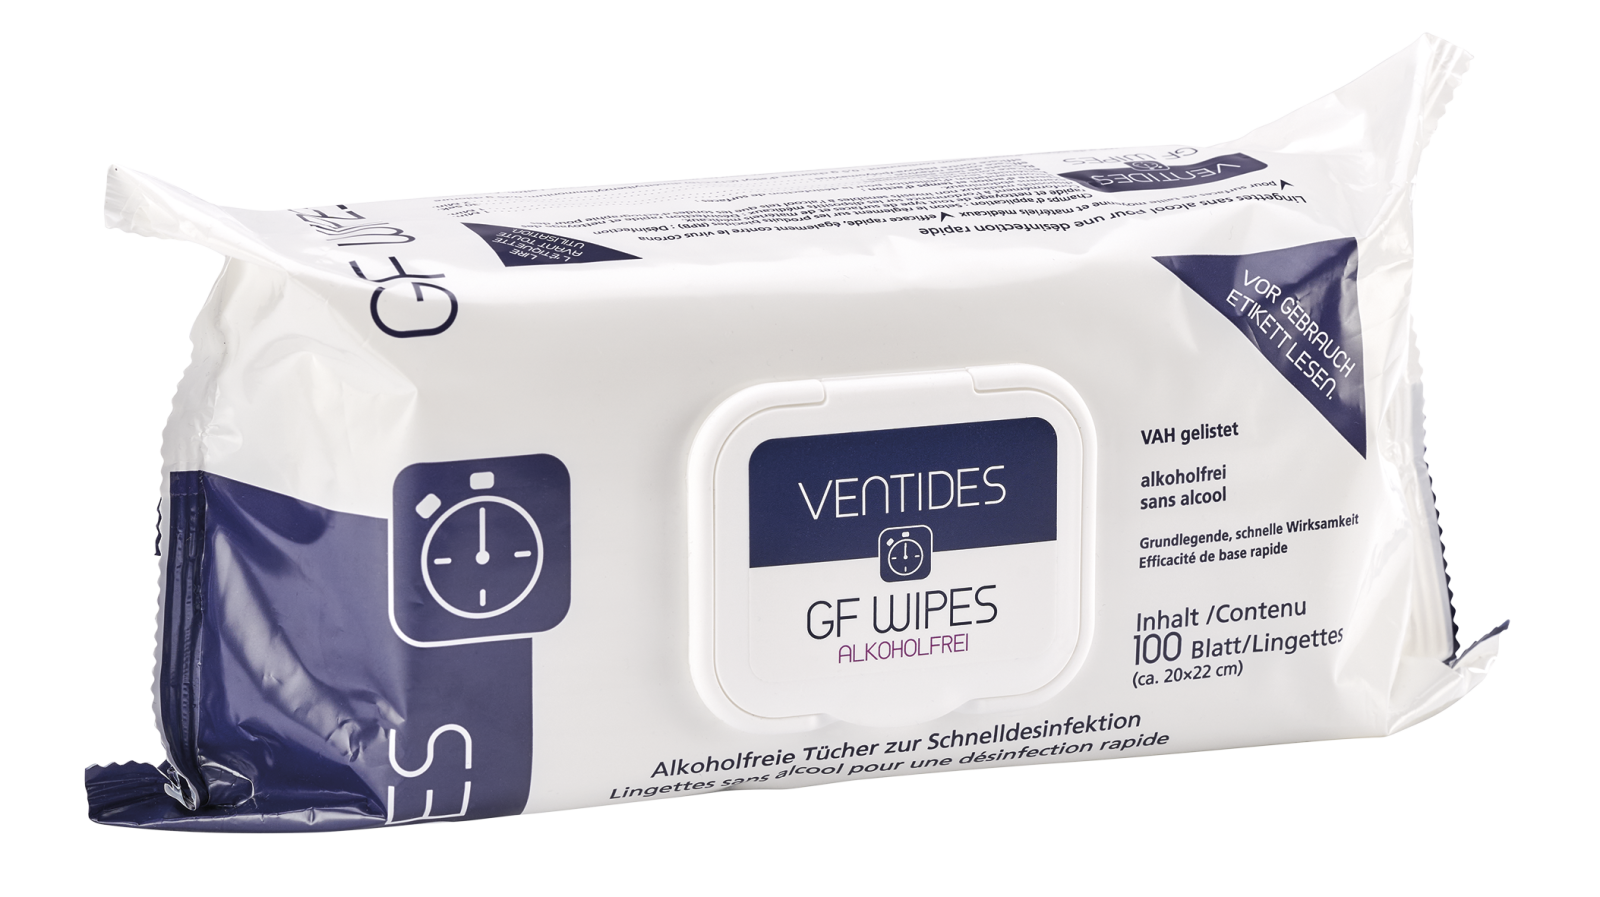 Ventides GF Wipes, alkoholfreie Desinfektionstücher, Ready 2 use, 100 Stück/Flow Pack, 22 x 20 cm